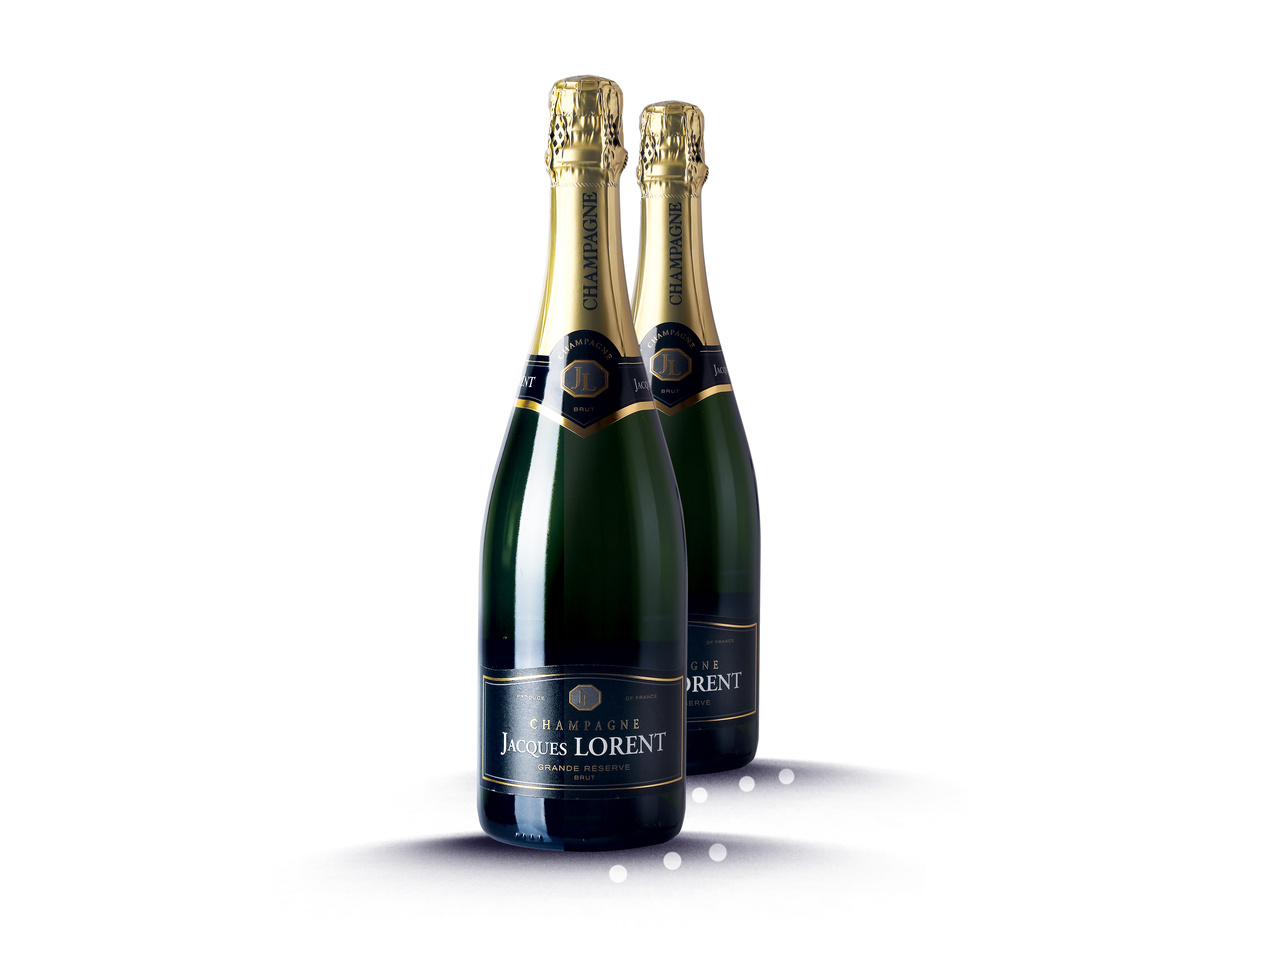 Champagne brut - Jacques Lorent1